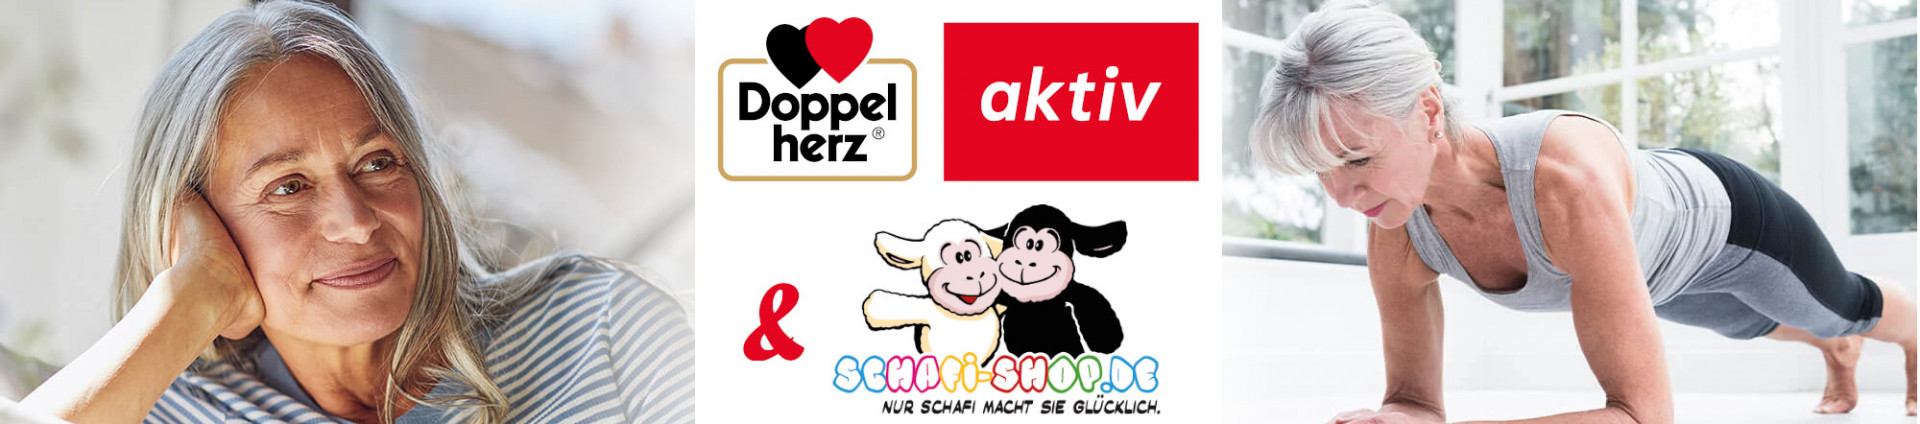 Logo Doppelherz Aktiv et logo Schafi-Shop avec une dame âgée